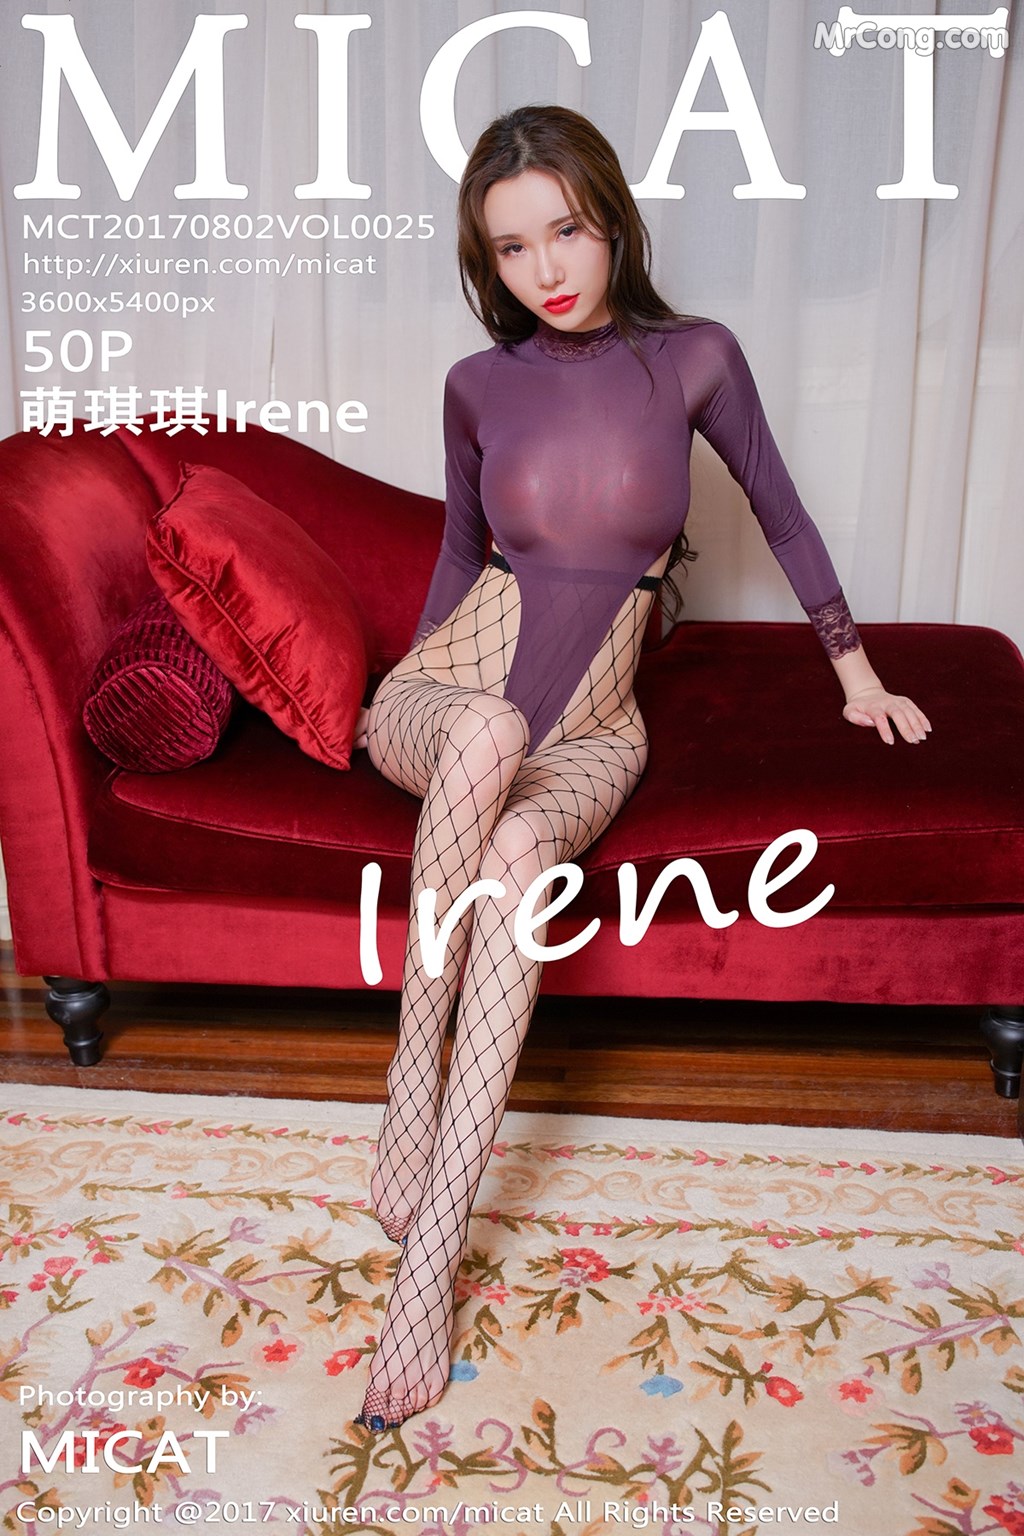 MiCat Vol.025: Model Irene (萌 琪琪) (51 photos) photo 1-0